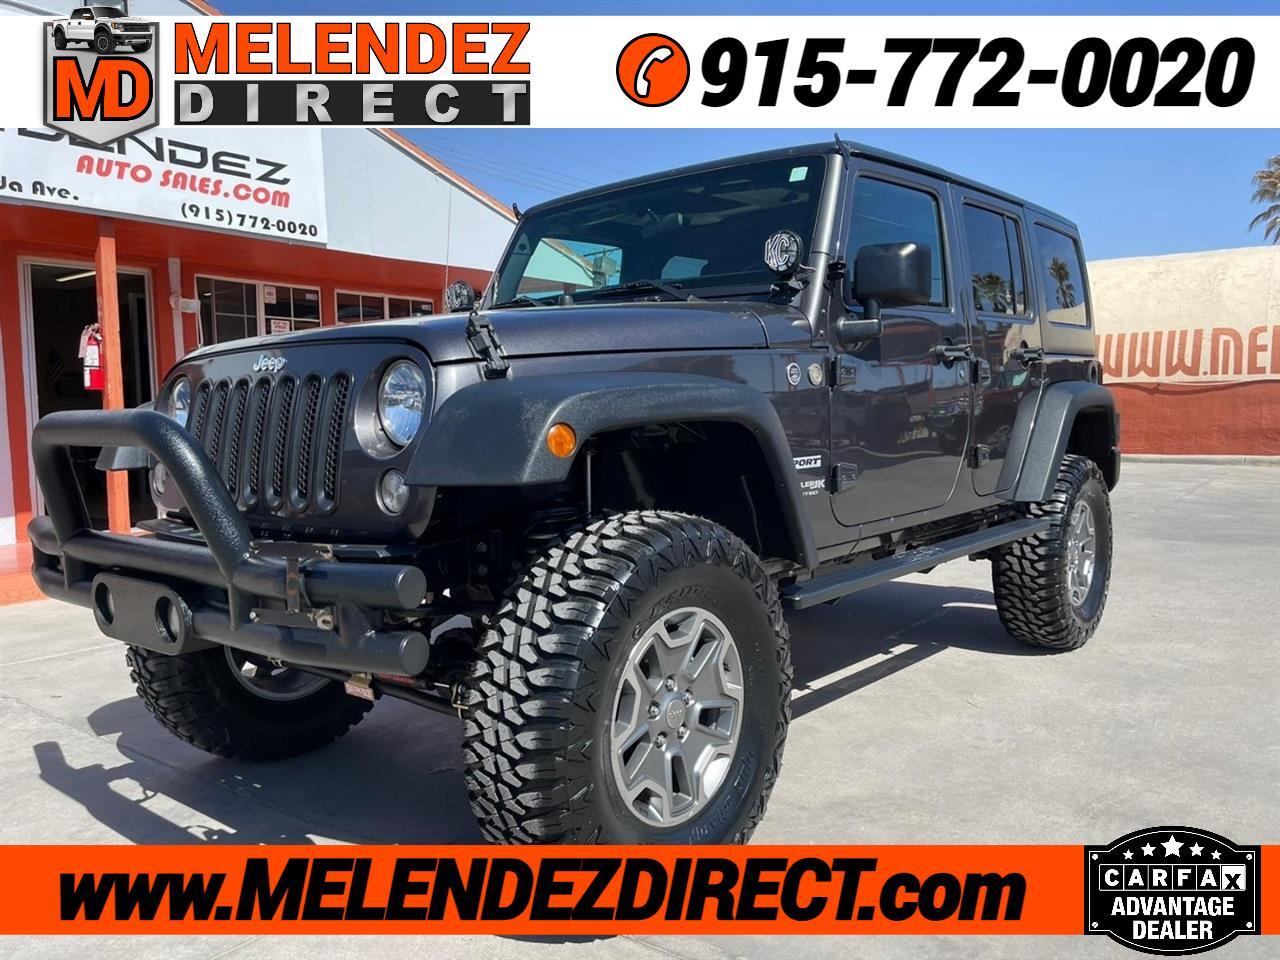 Used 2018 Jeep Wrangler JK Unlimited Sport 4x4 for Sale in El Paso TX 79915  Melendez Auto Sales Inc